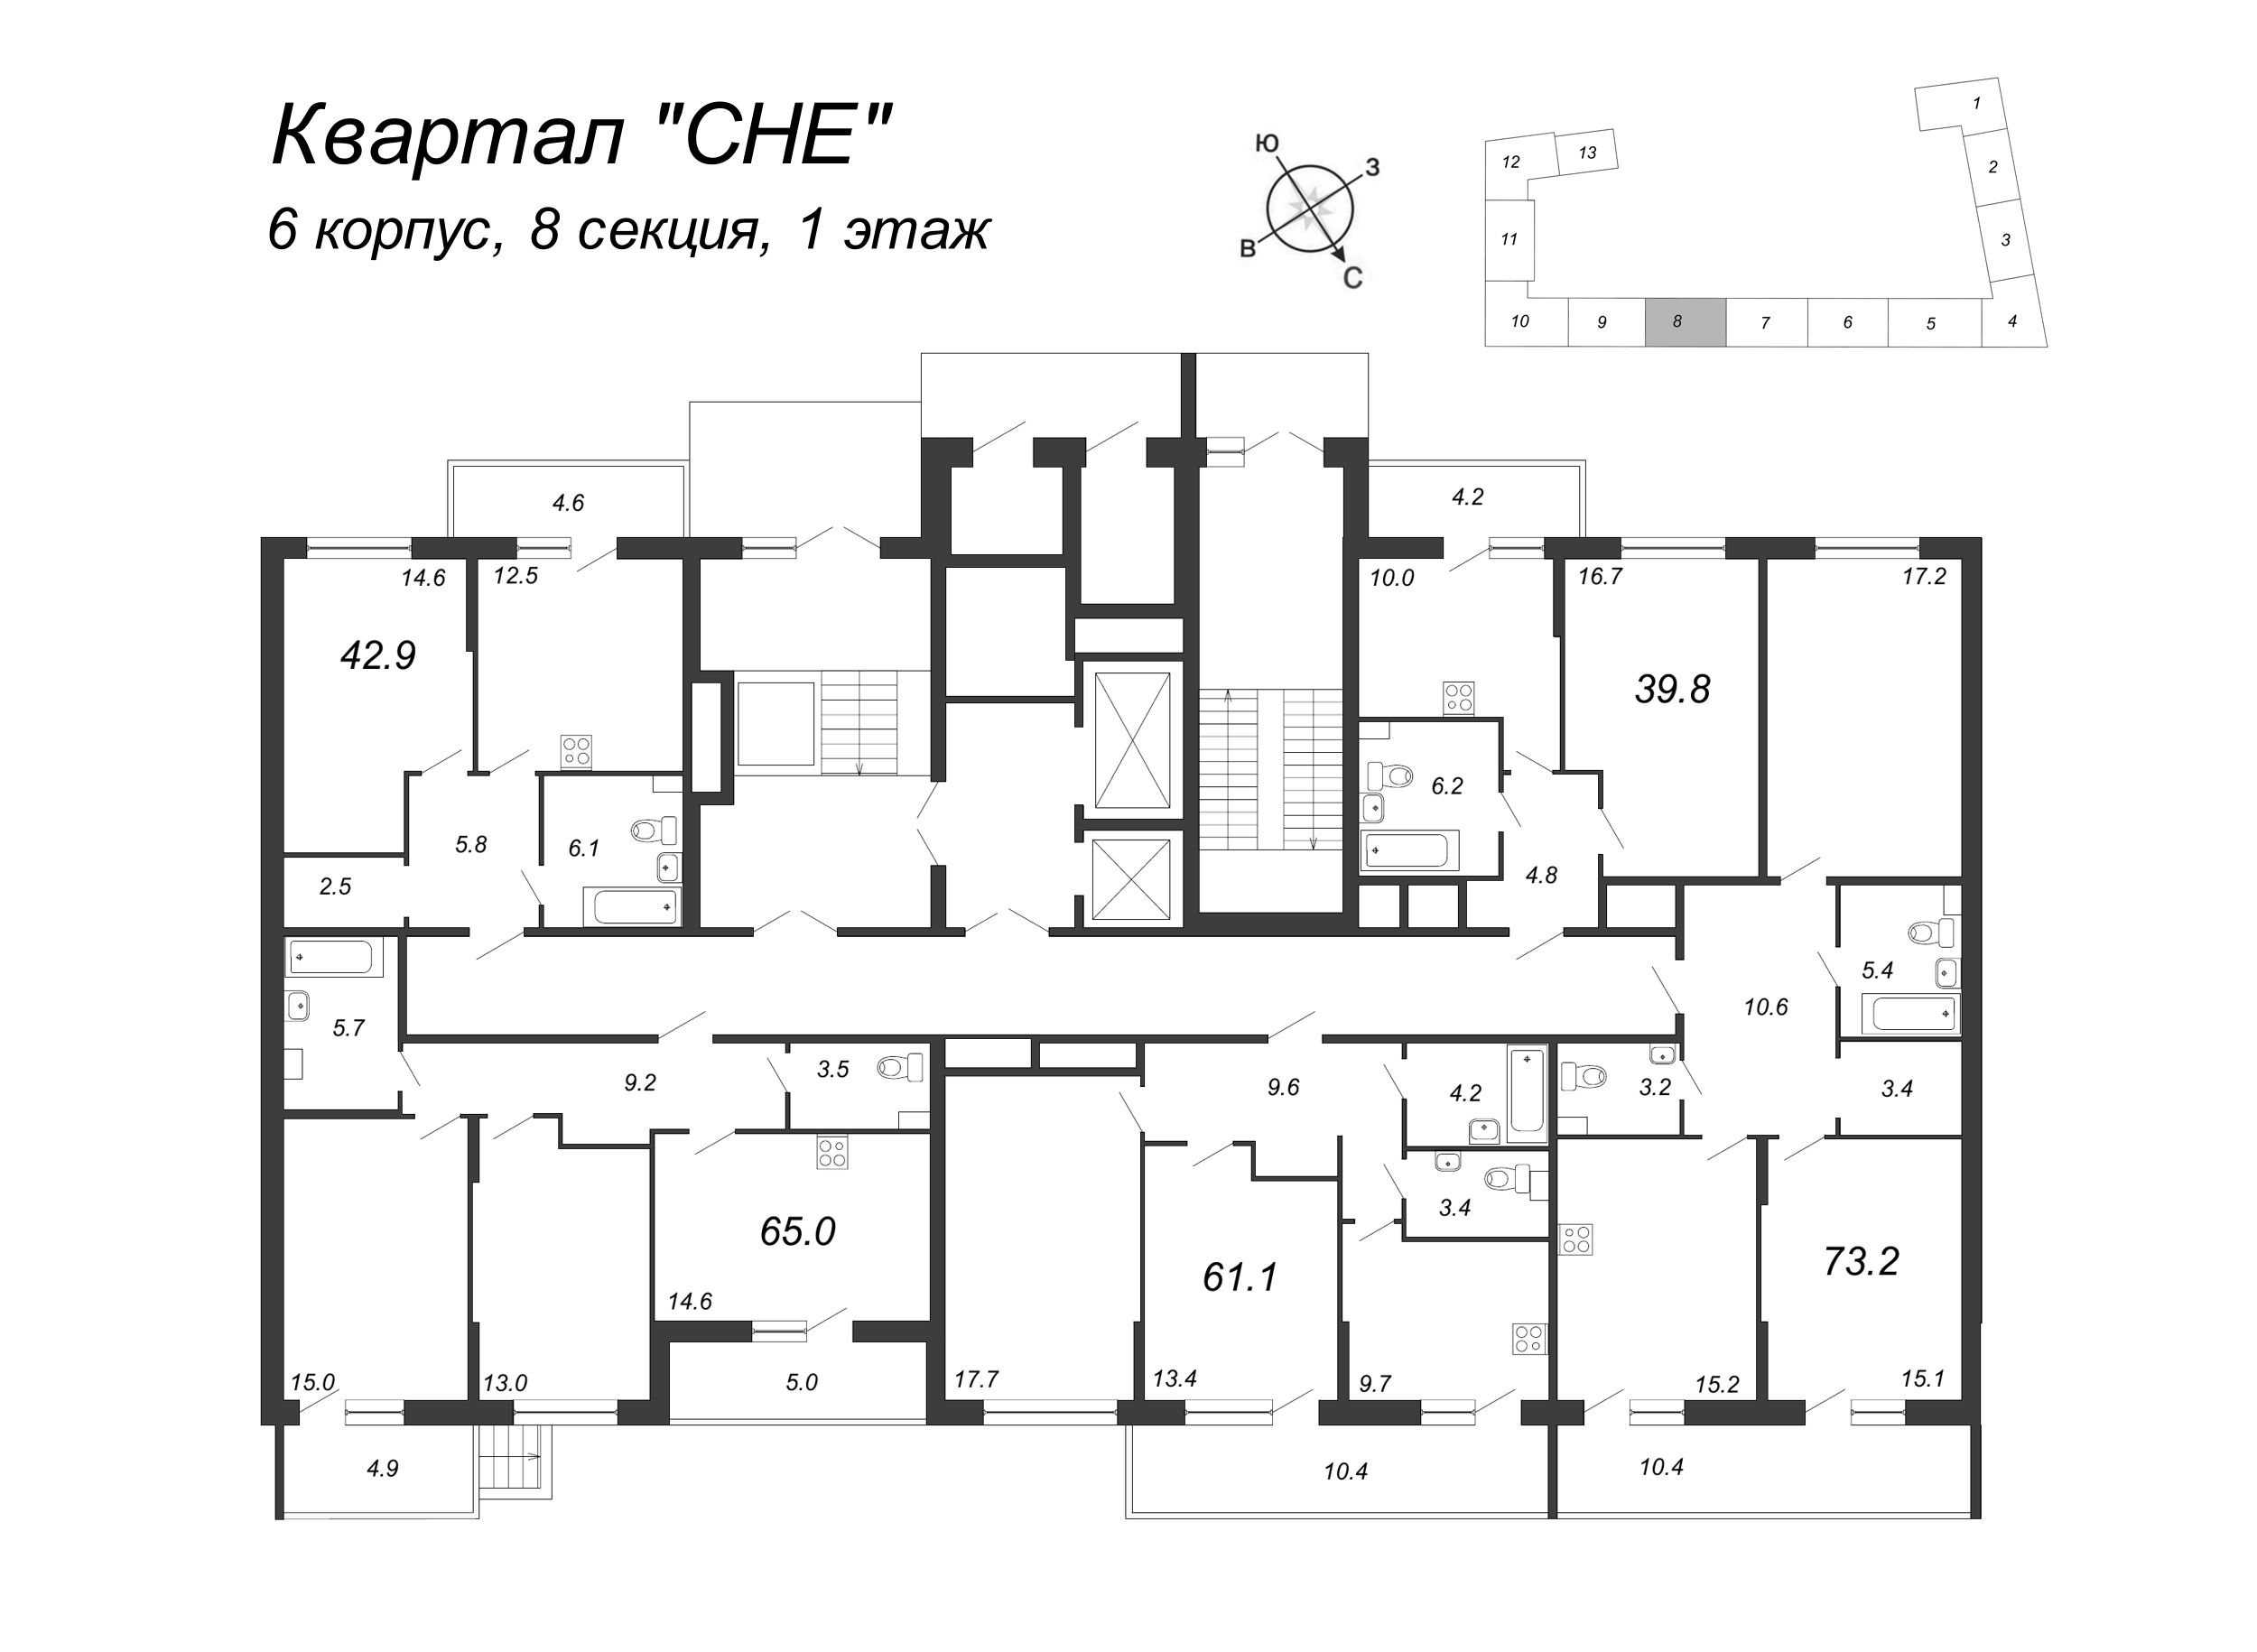 1-комнатная квартира, 40.1 м² в ЖК "Квартал Che" - планировка этажа